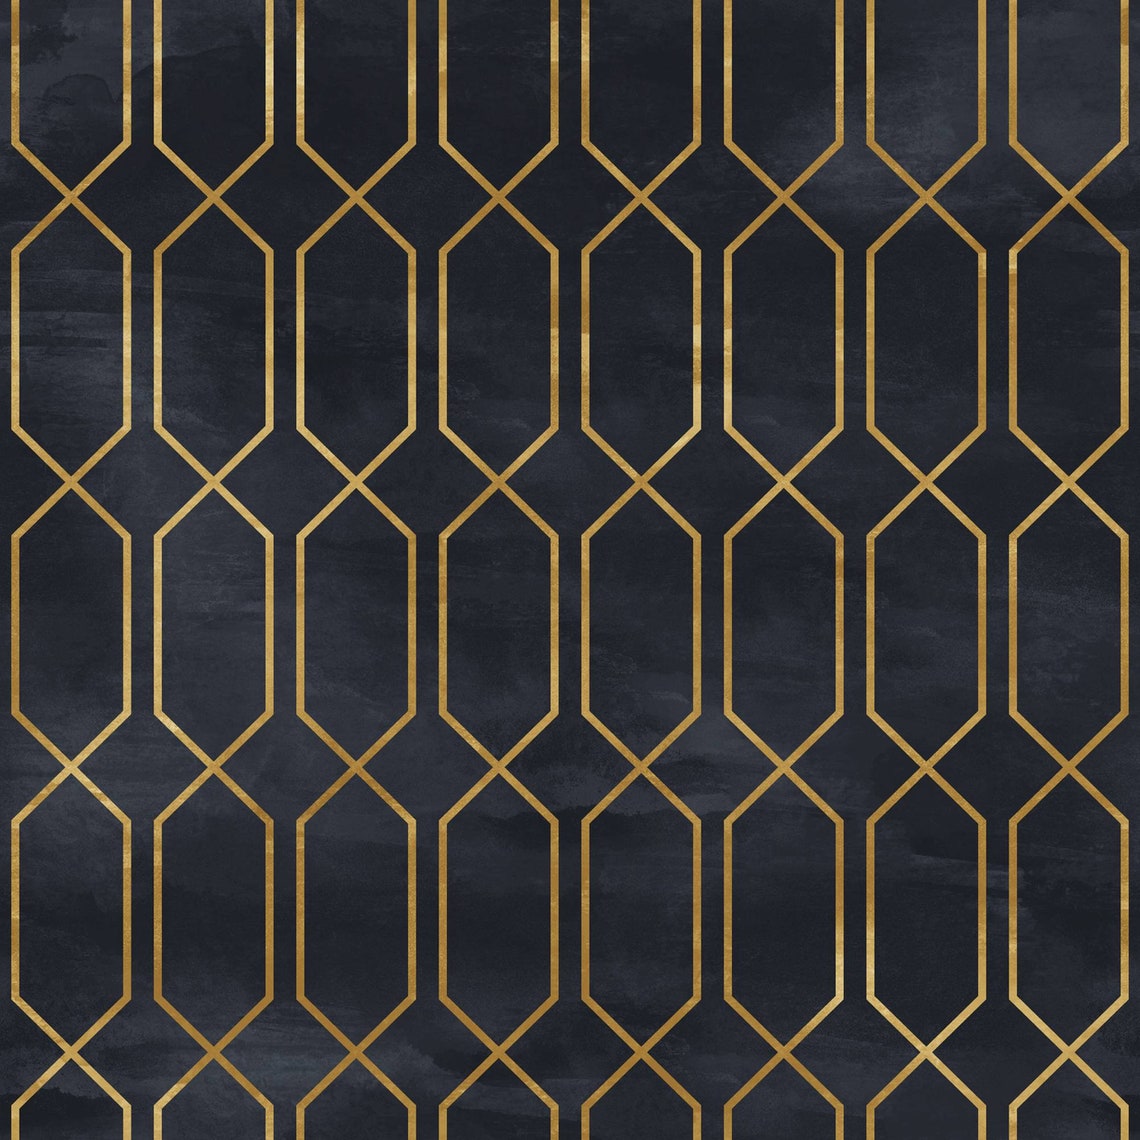 Art Deco Geometric Black & Gold Wallpaper Removable Peel and | Etsy